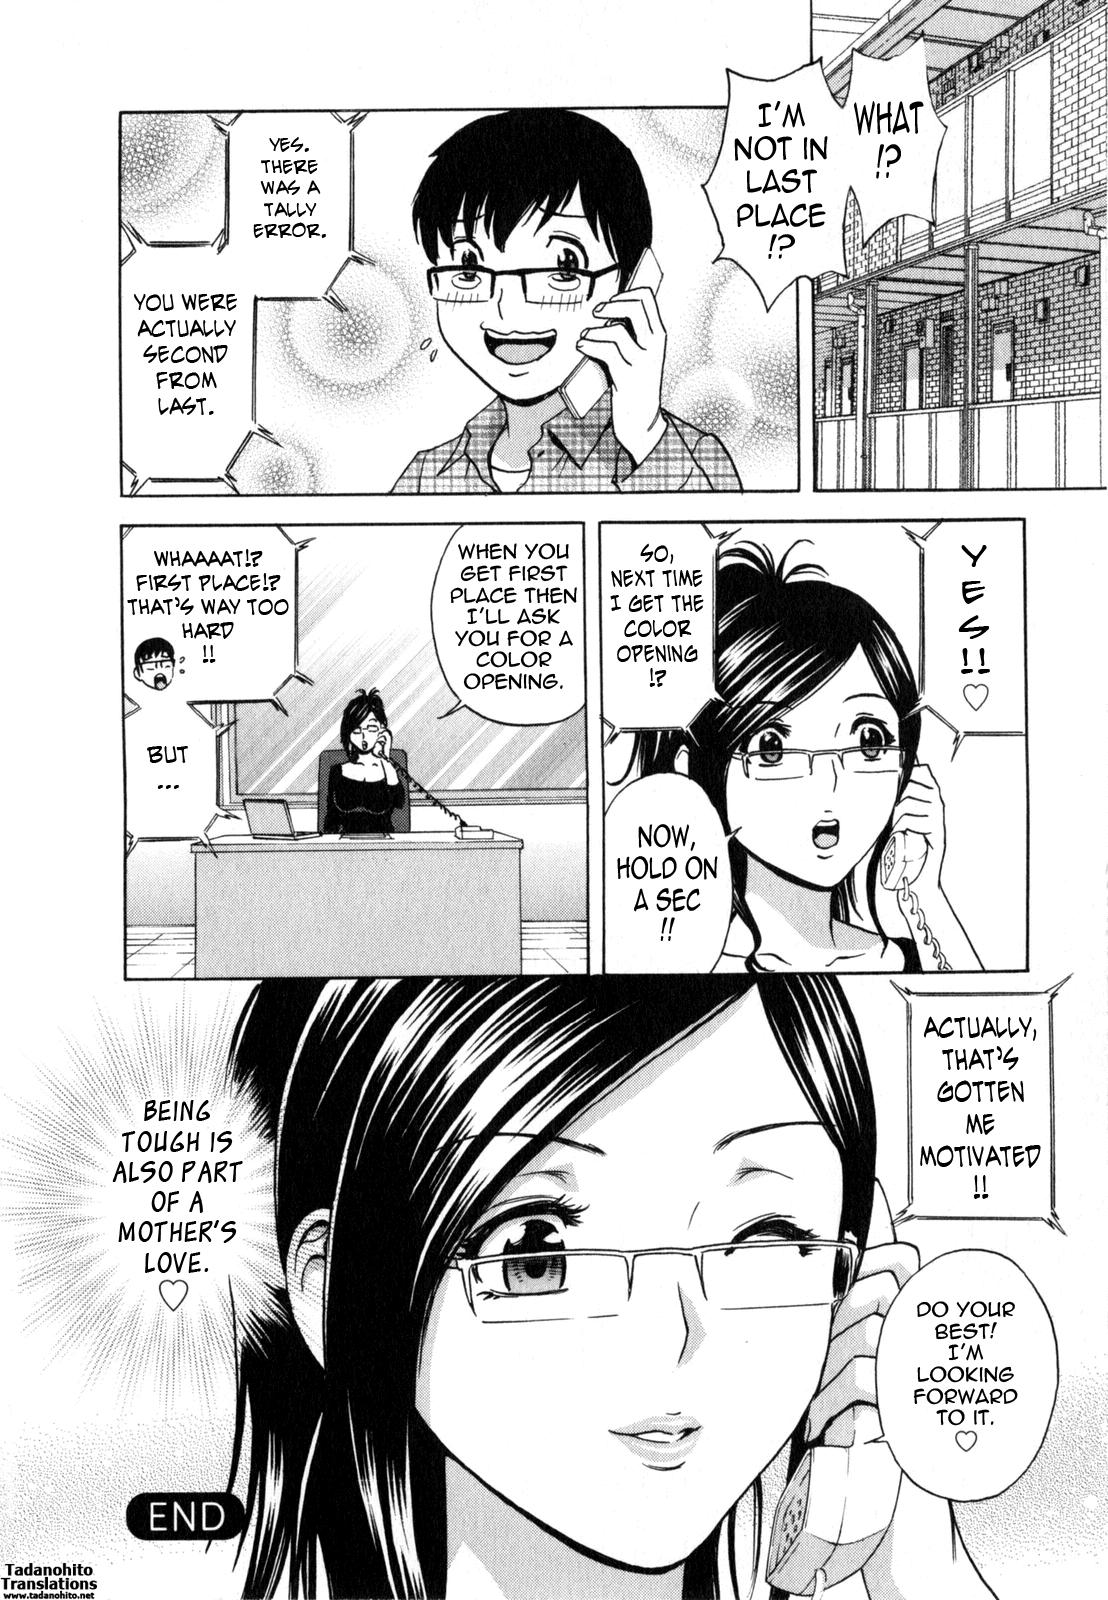 [Hidemaru] Life with Married Women Just Like a Manga 2 - Ch. 1-5 [English] {Tadanohito} 84